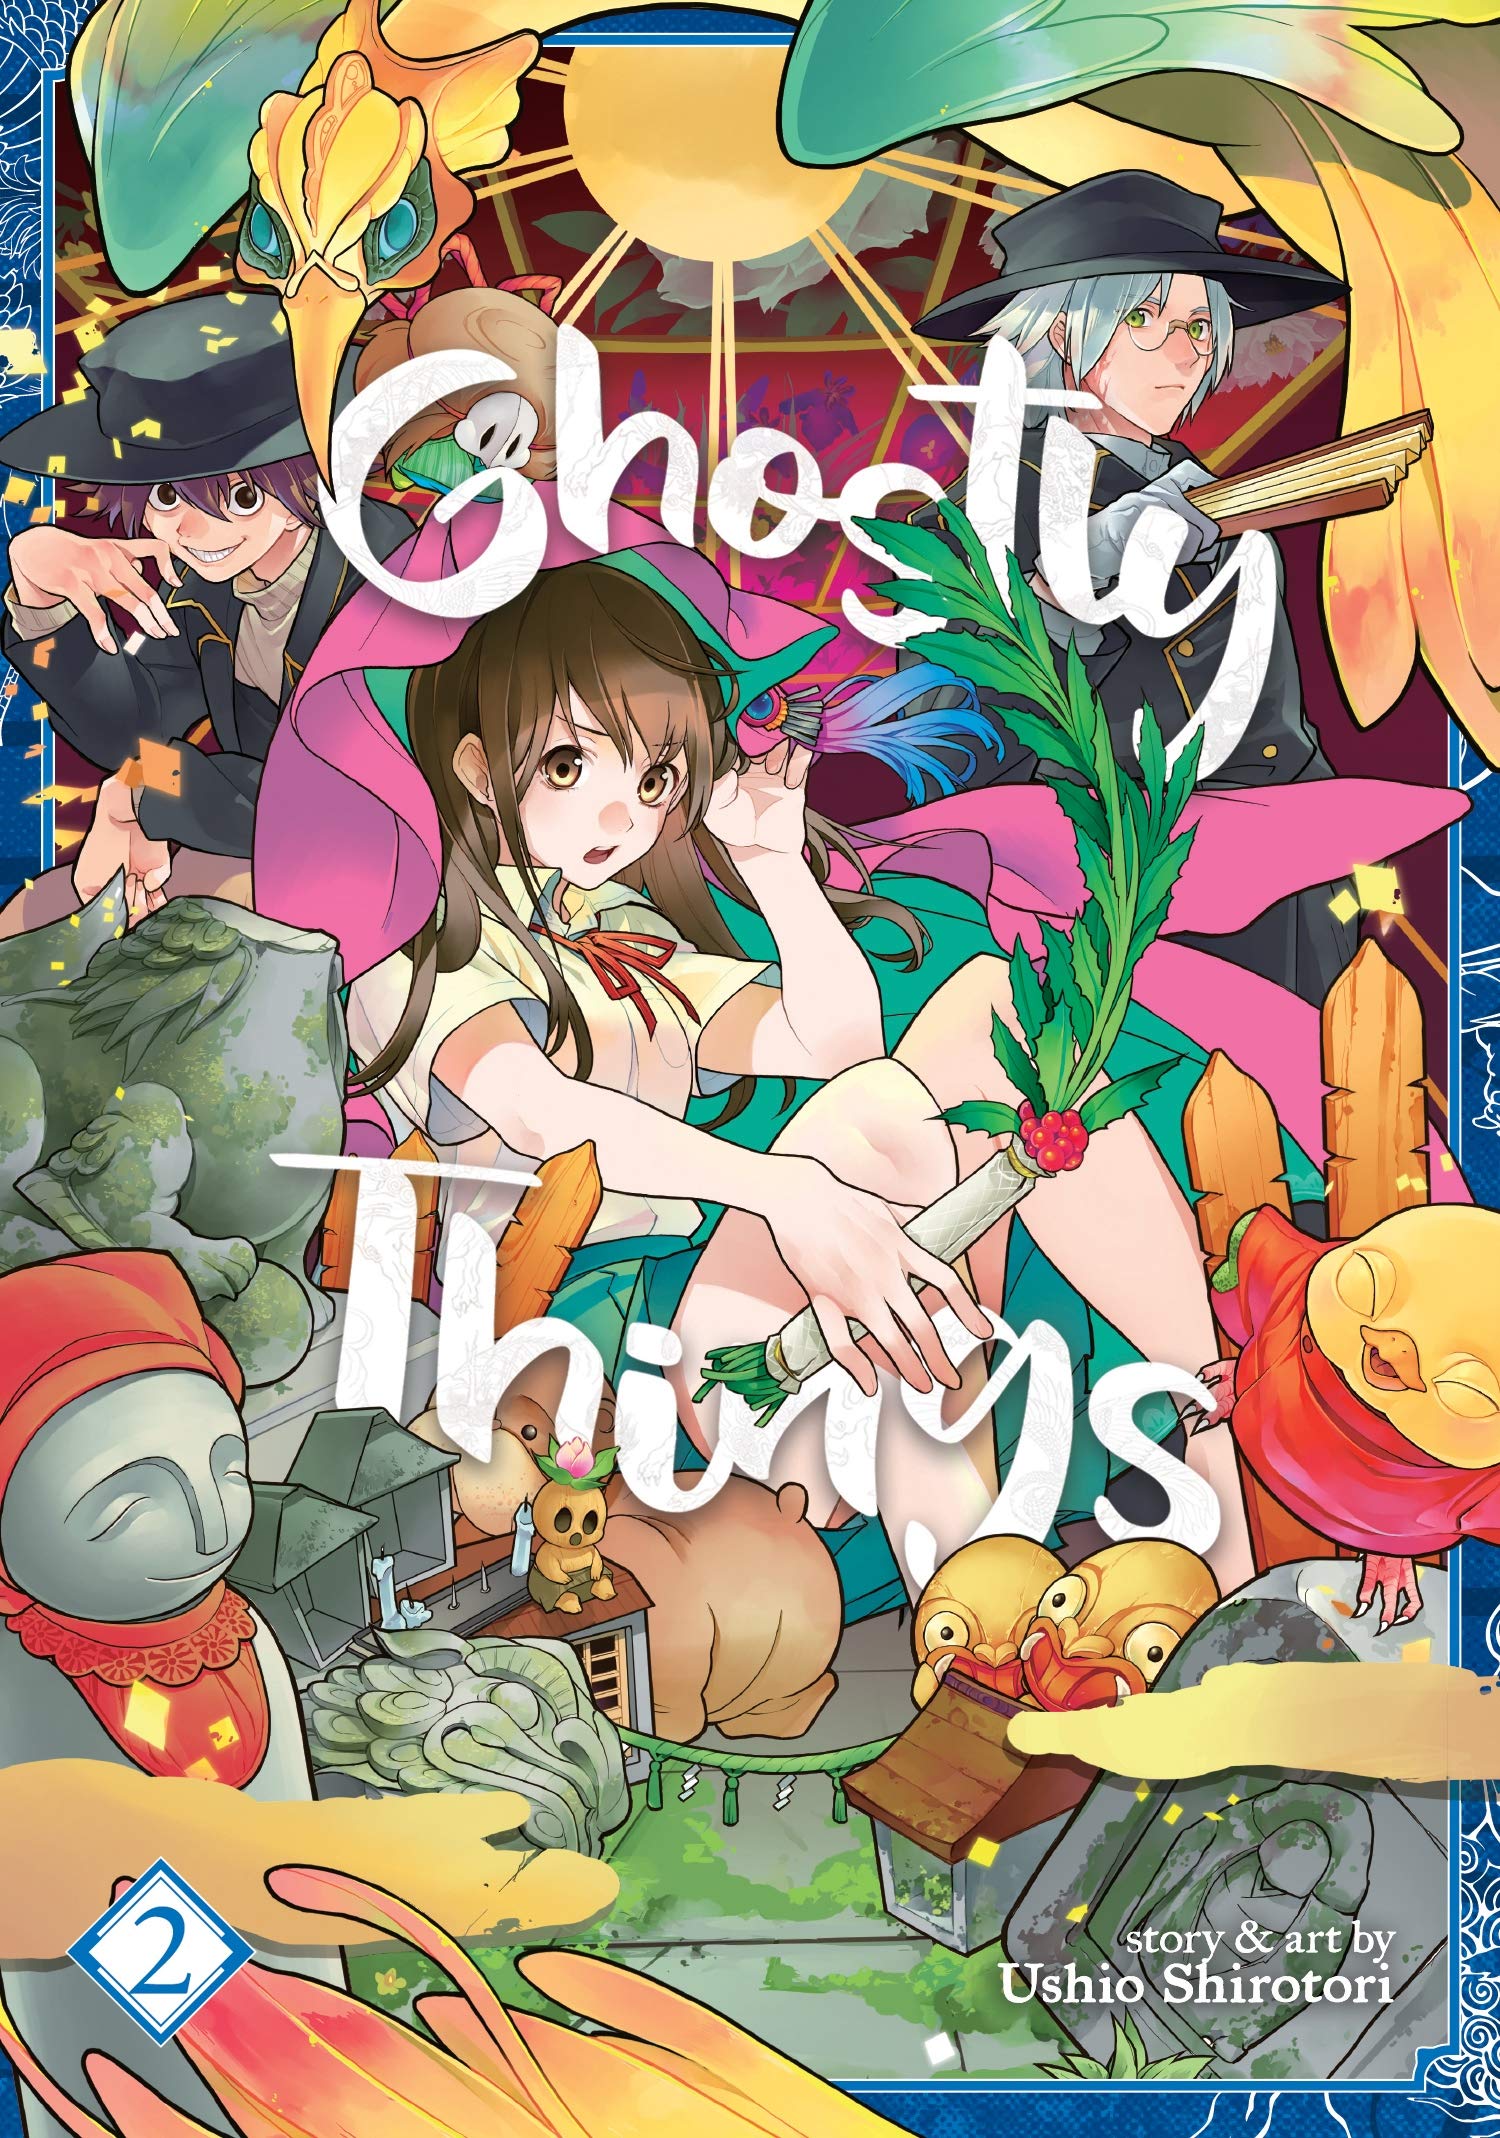 Ghostly Things - Volume 2 | Ushio Shirotori